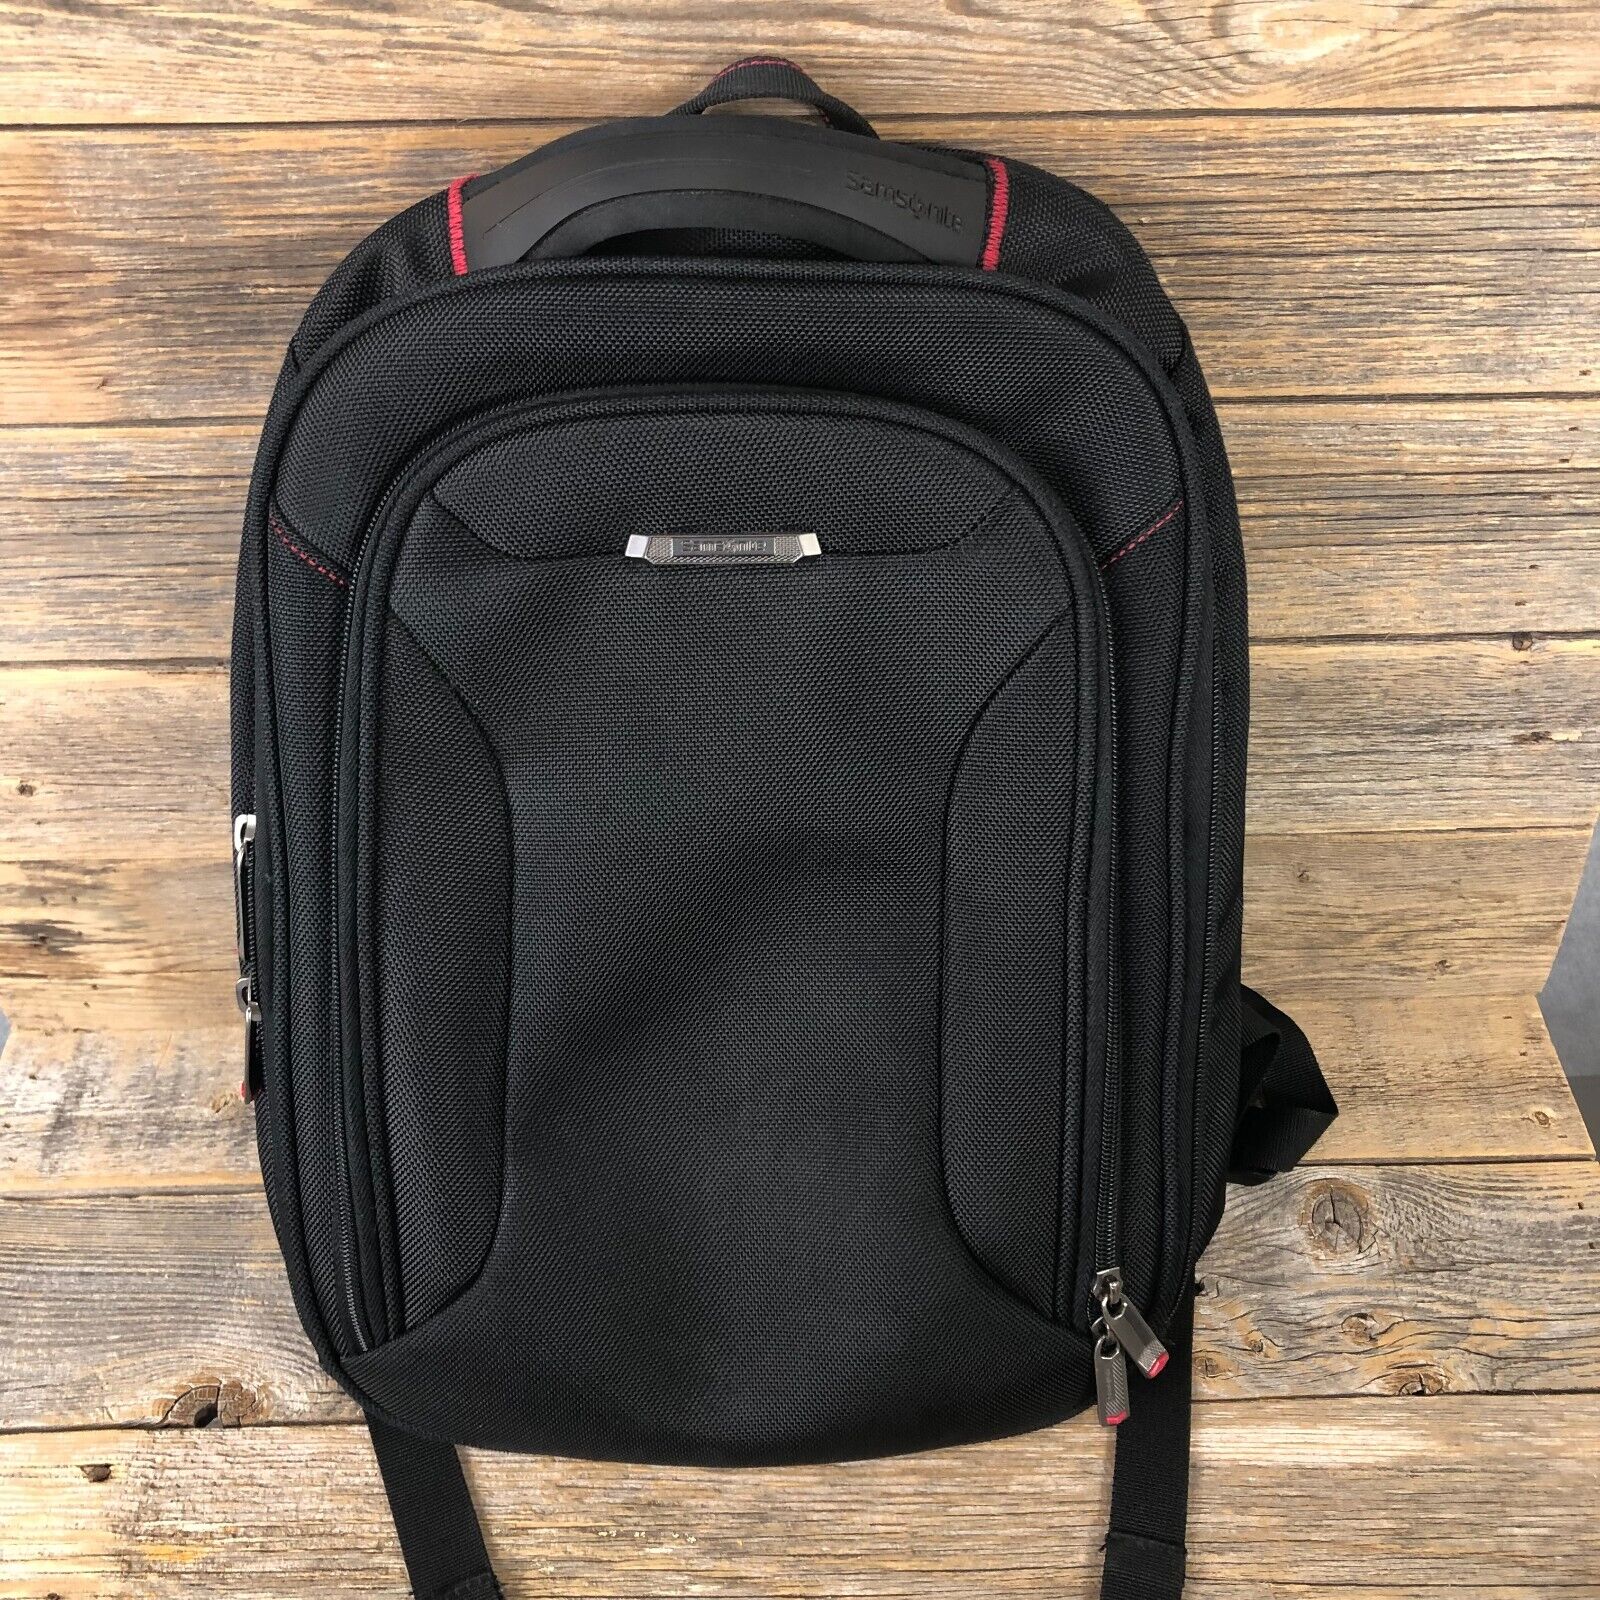 Samsonite Backpack Air Channel System Black Laptop TSA Friendly Carry On Padded